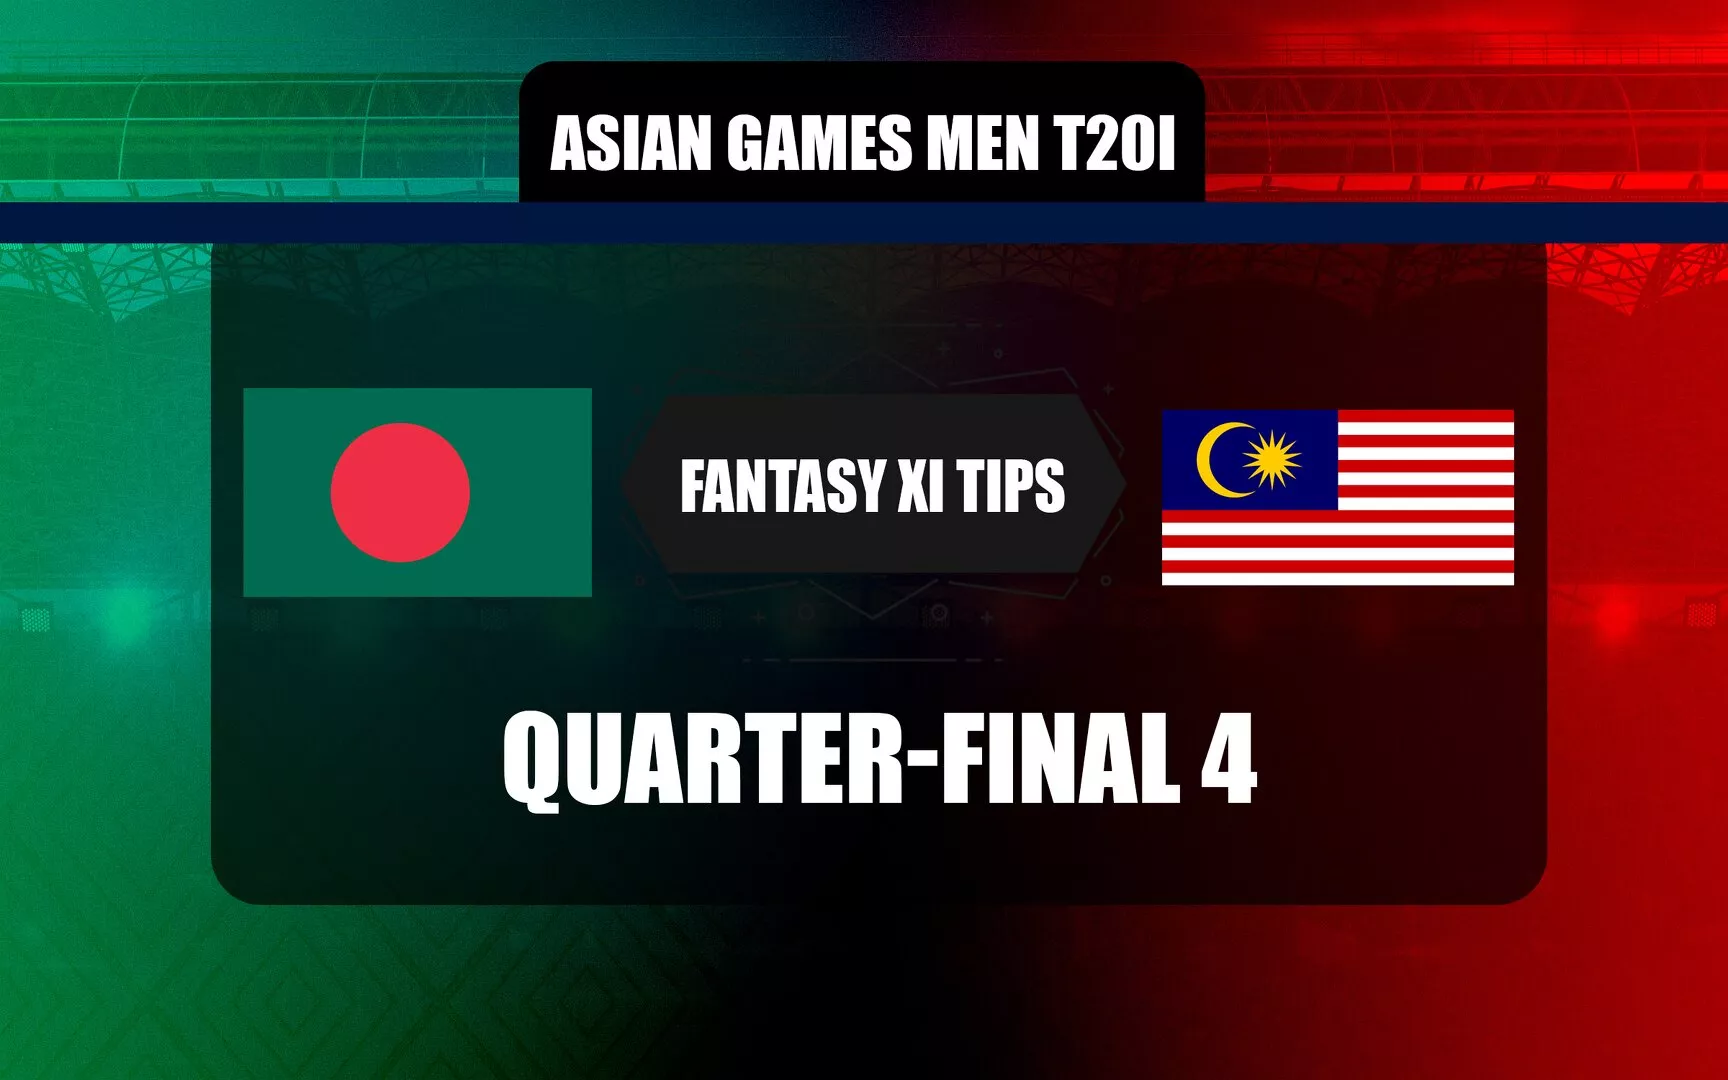 BAN vs MAL Dream11 Prediction, Dream11 Playing XI, Today Quarter Final 4, Asian Games Men T20I